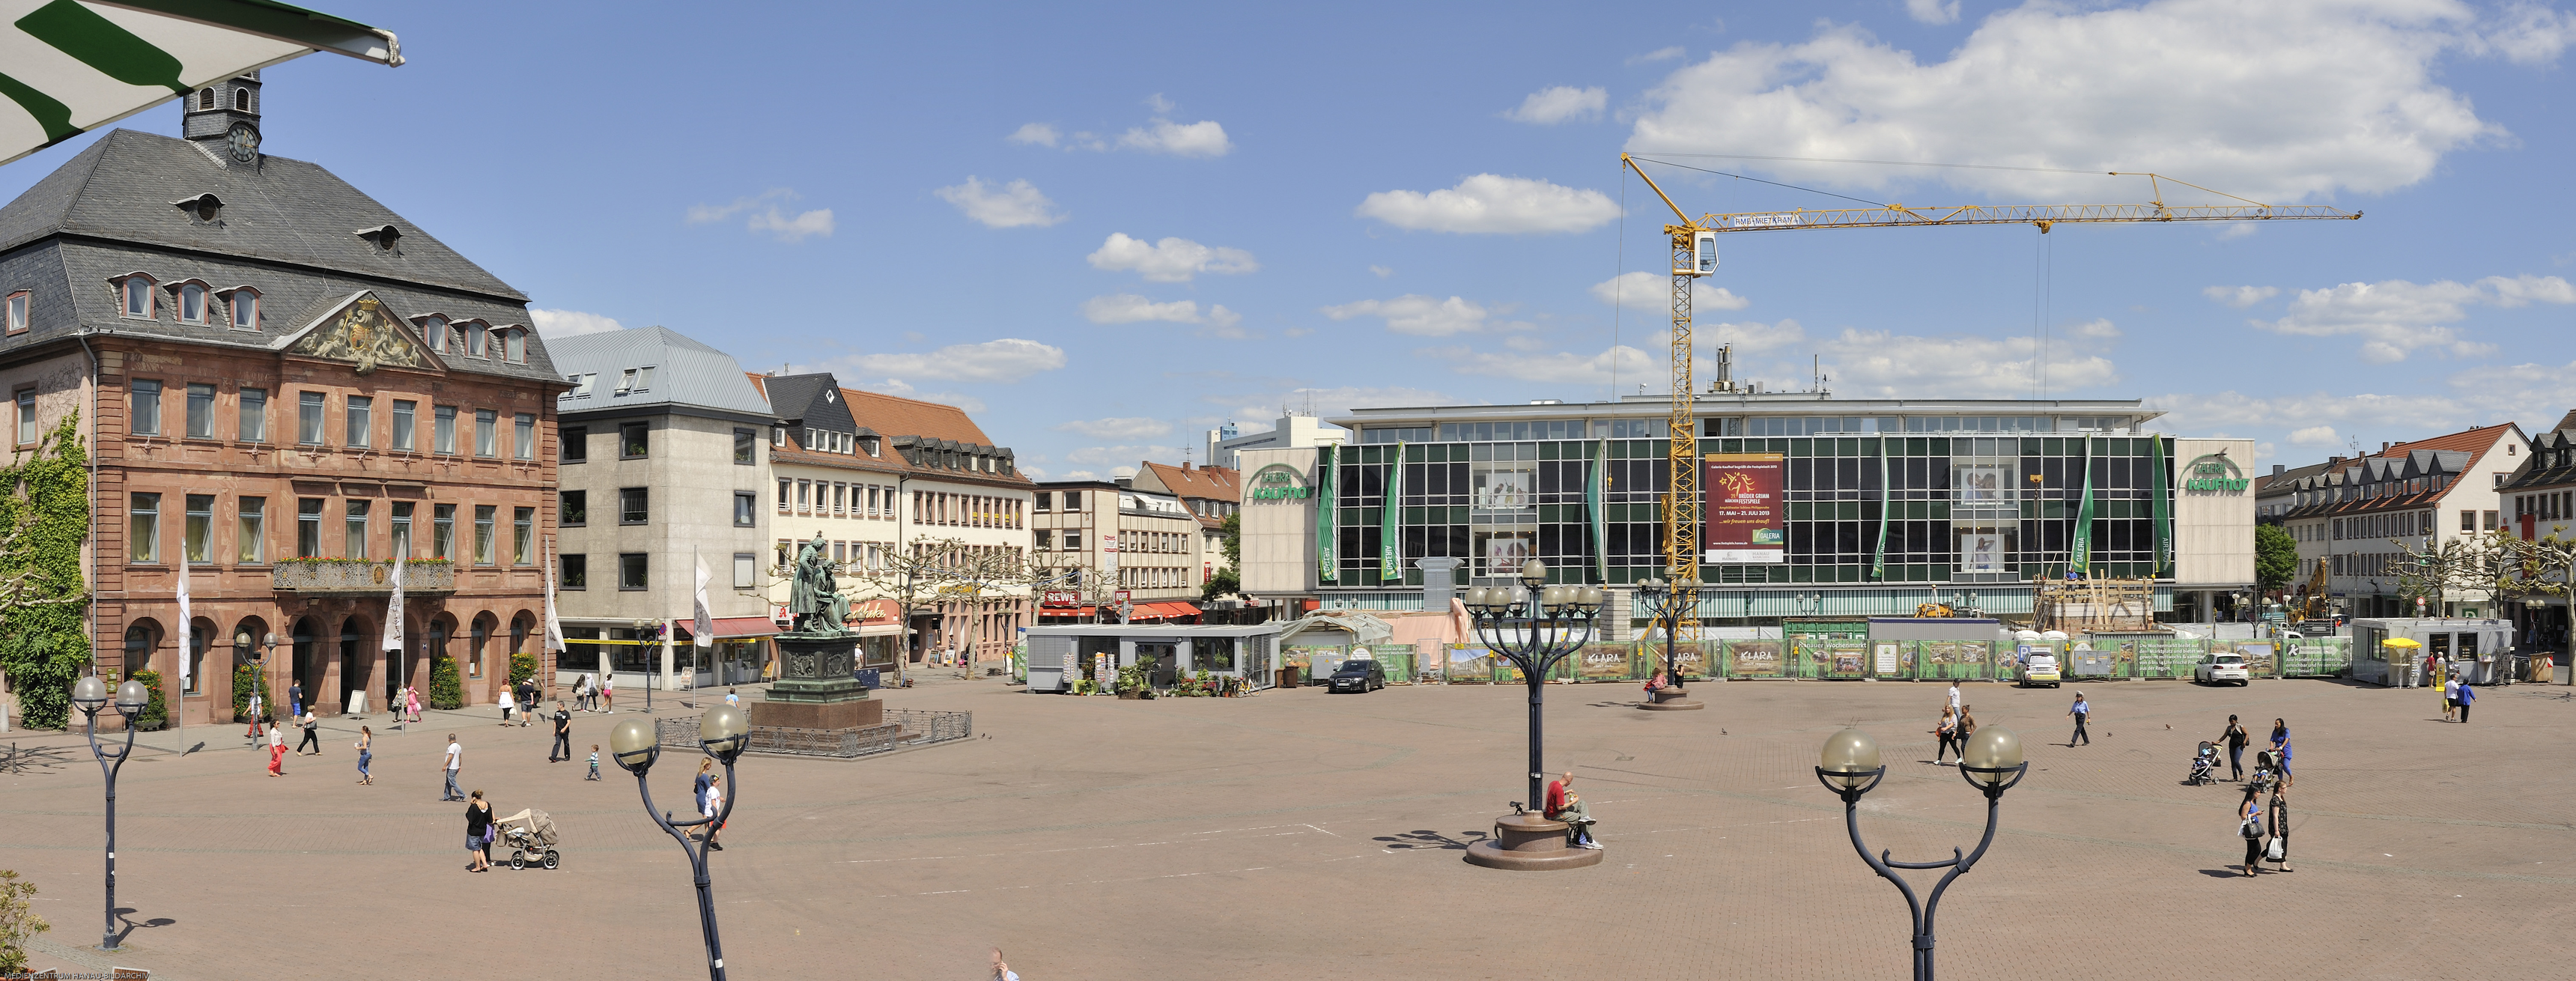 sliderimage-Marktplatz Umbau